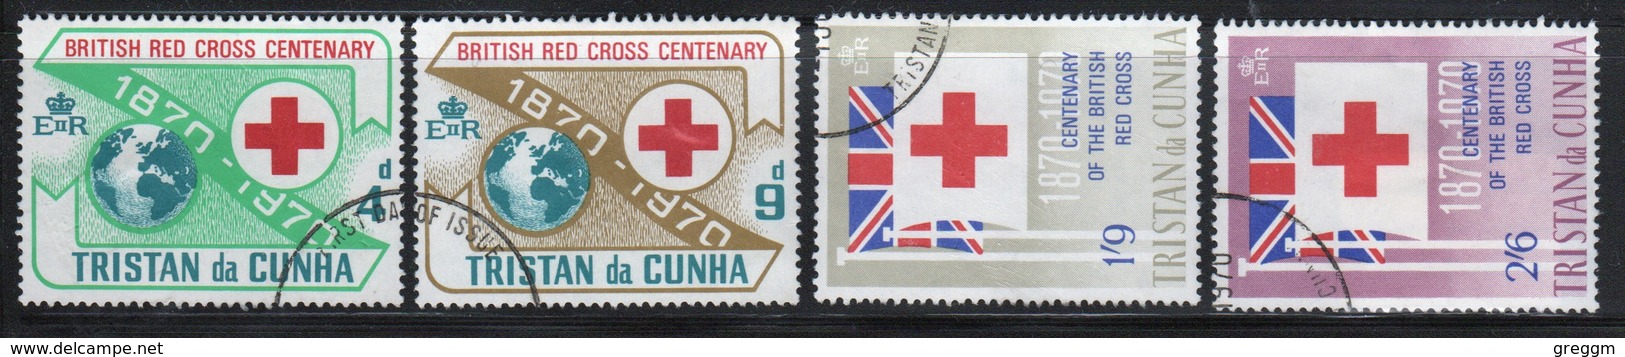 Tristan Da Cunha 1970 Complete Set Of Stamps Commemorating Centenary Of The British Red Cross. - Tristan Da Cunha